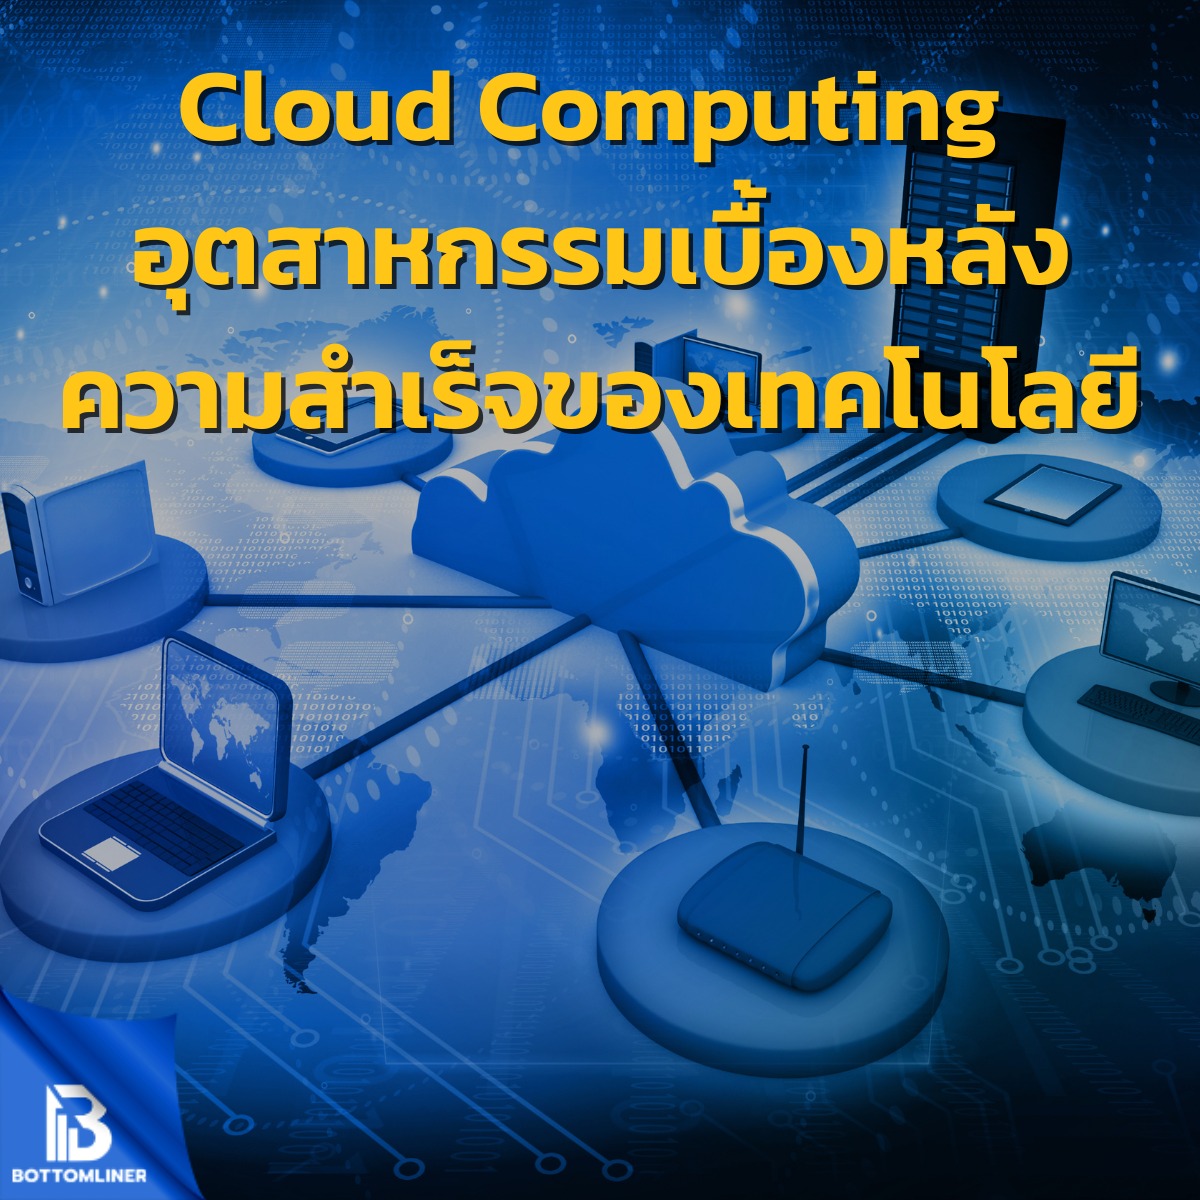 Cloud Computing อุตสาหกรรมเบื้องหลังความสำเร็จของเทคโนโลยี